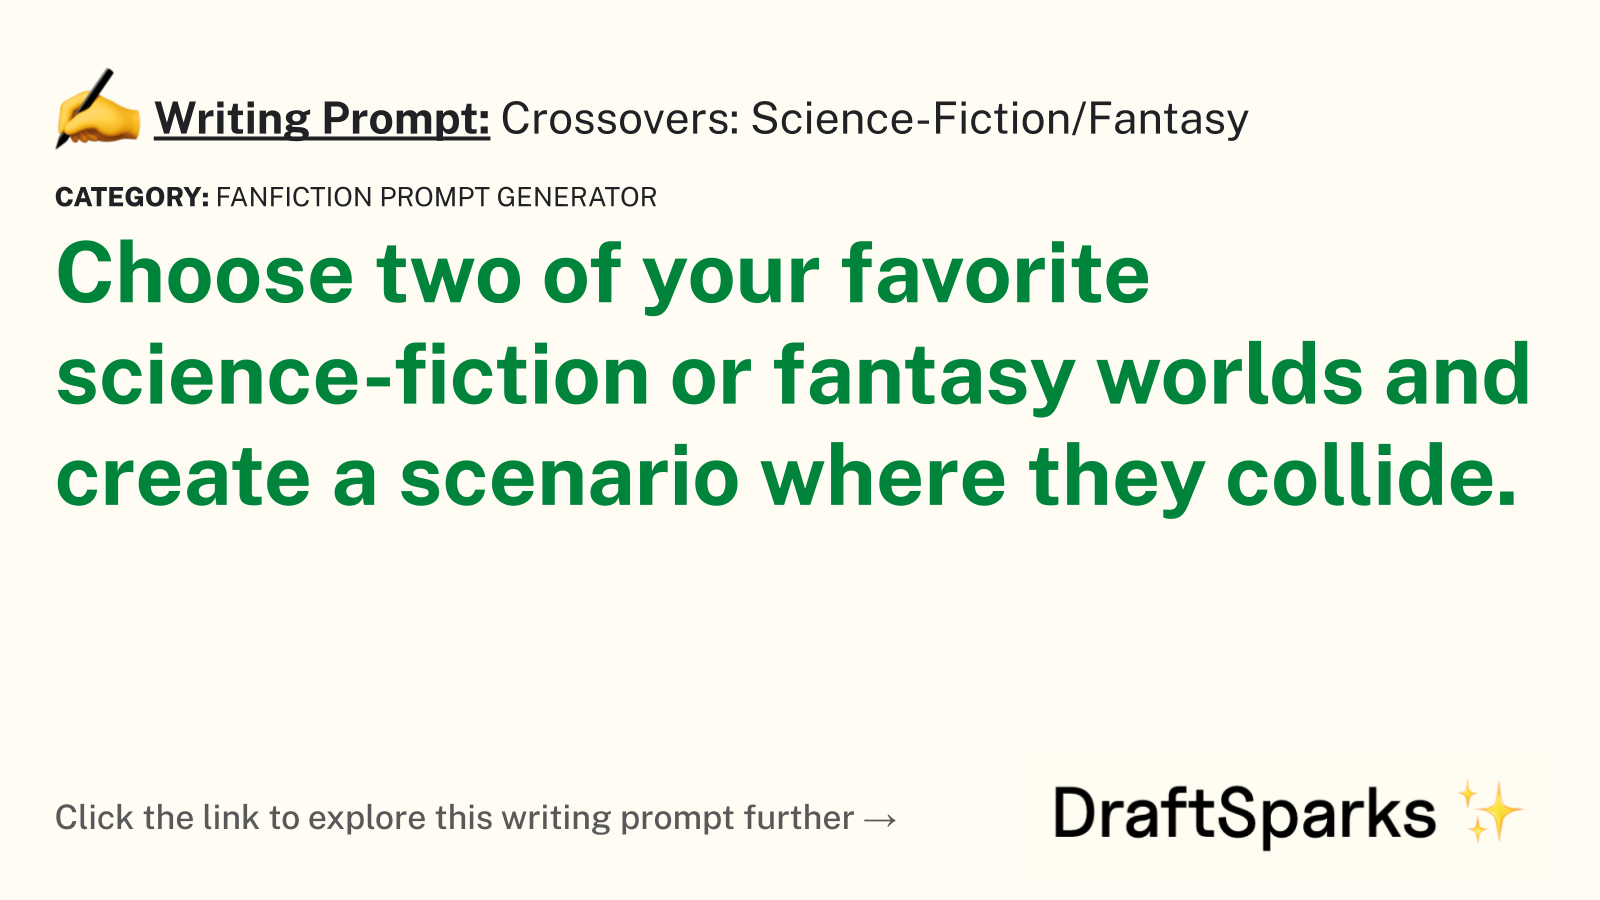 Crossovers: Science-Fiction/Fantasy